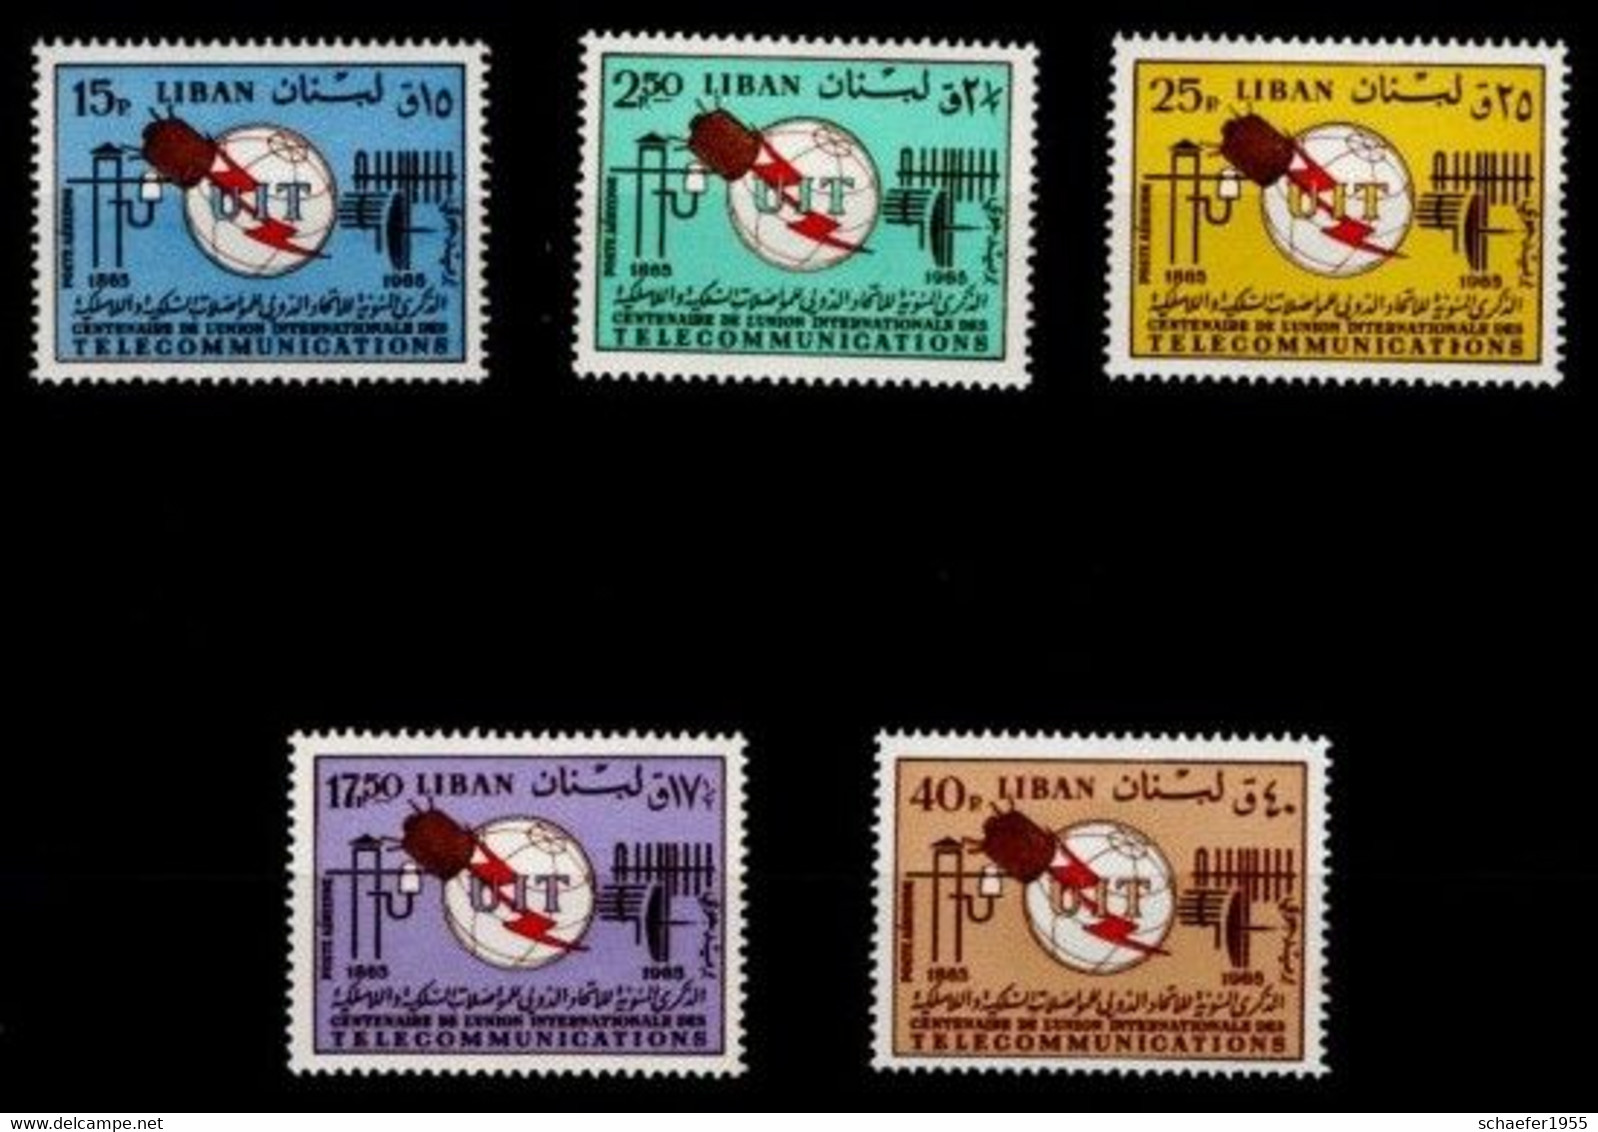 Liban, Libanon 1966 UIT FDC + Stamps Perf. - Asien